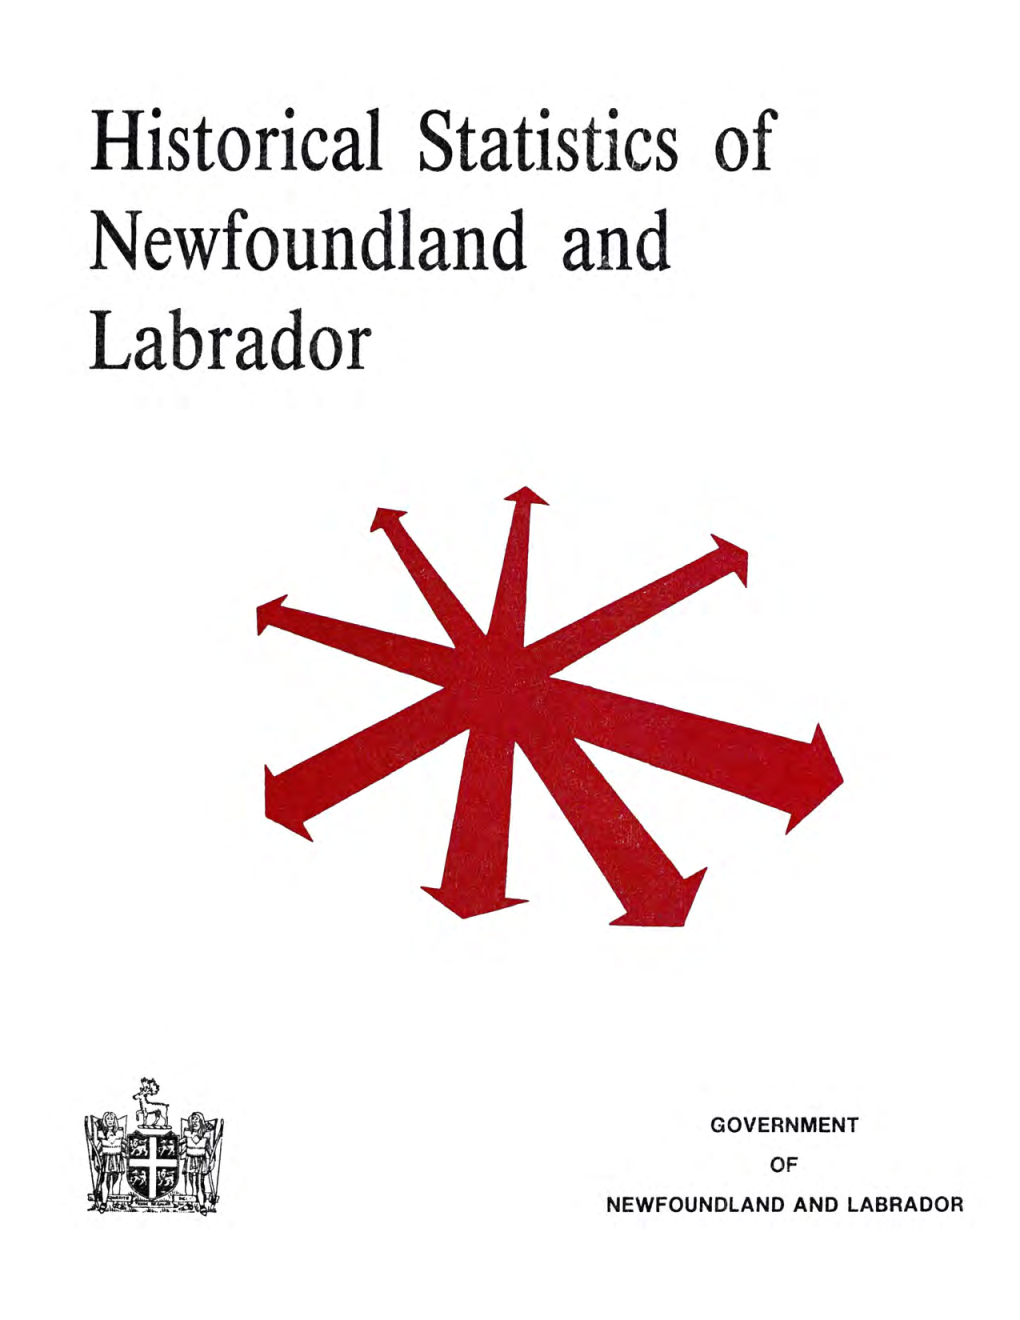 Historical Statistics of Newfoundland and Labrador